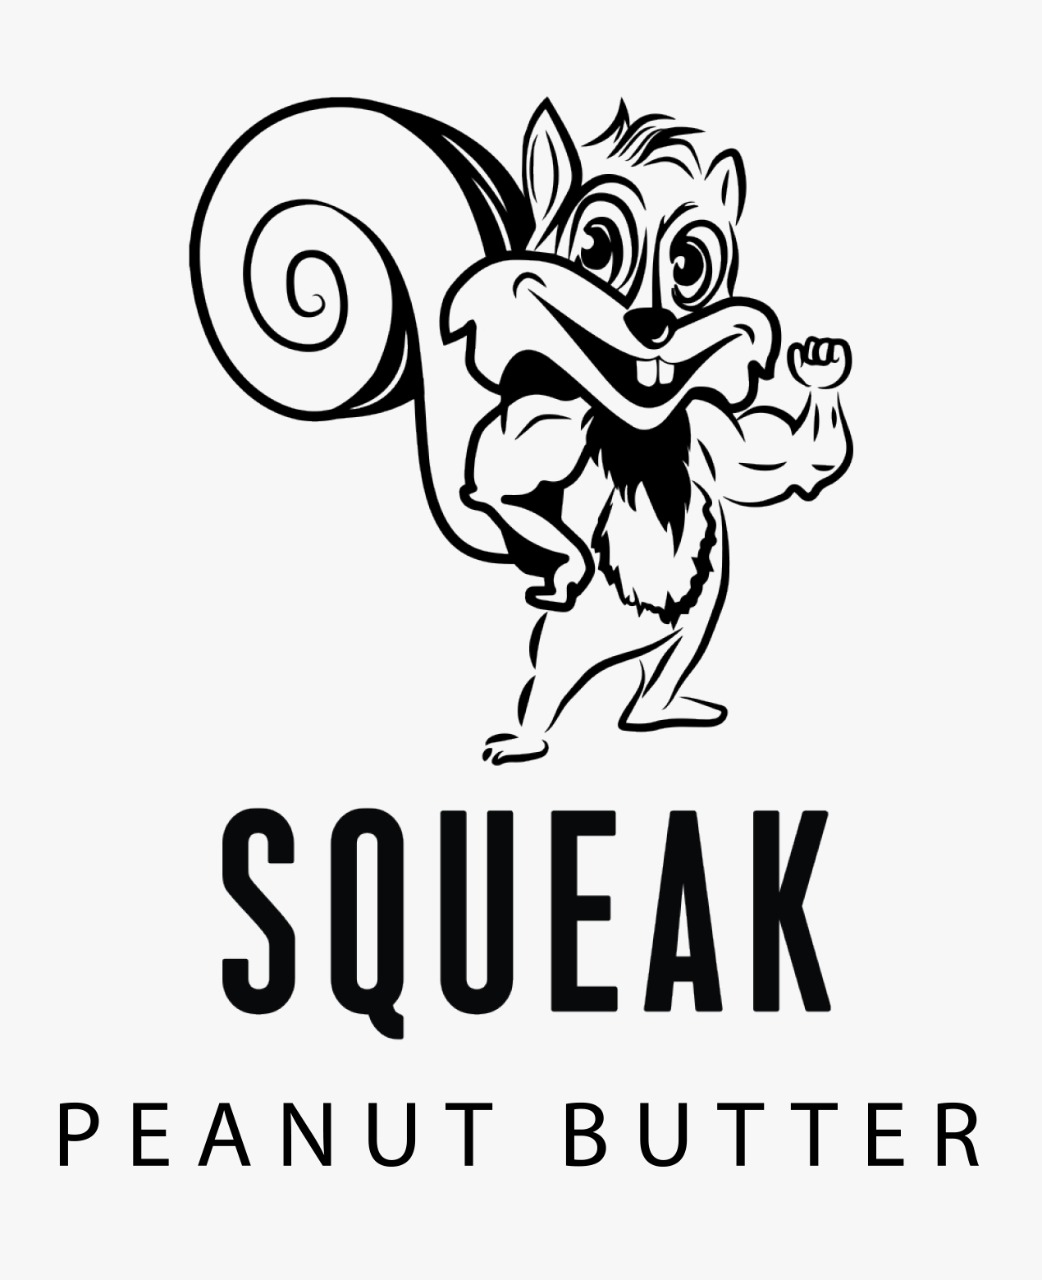 Squeak peanut butter